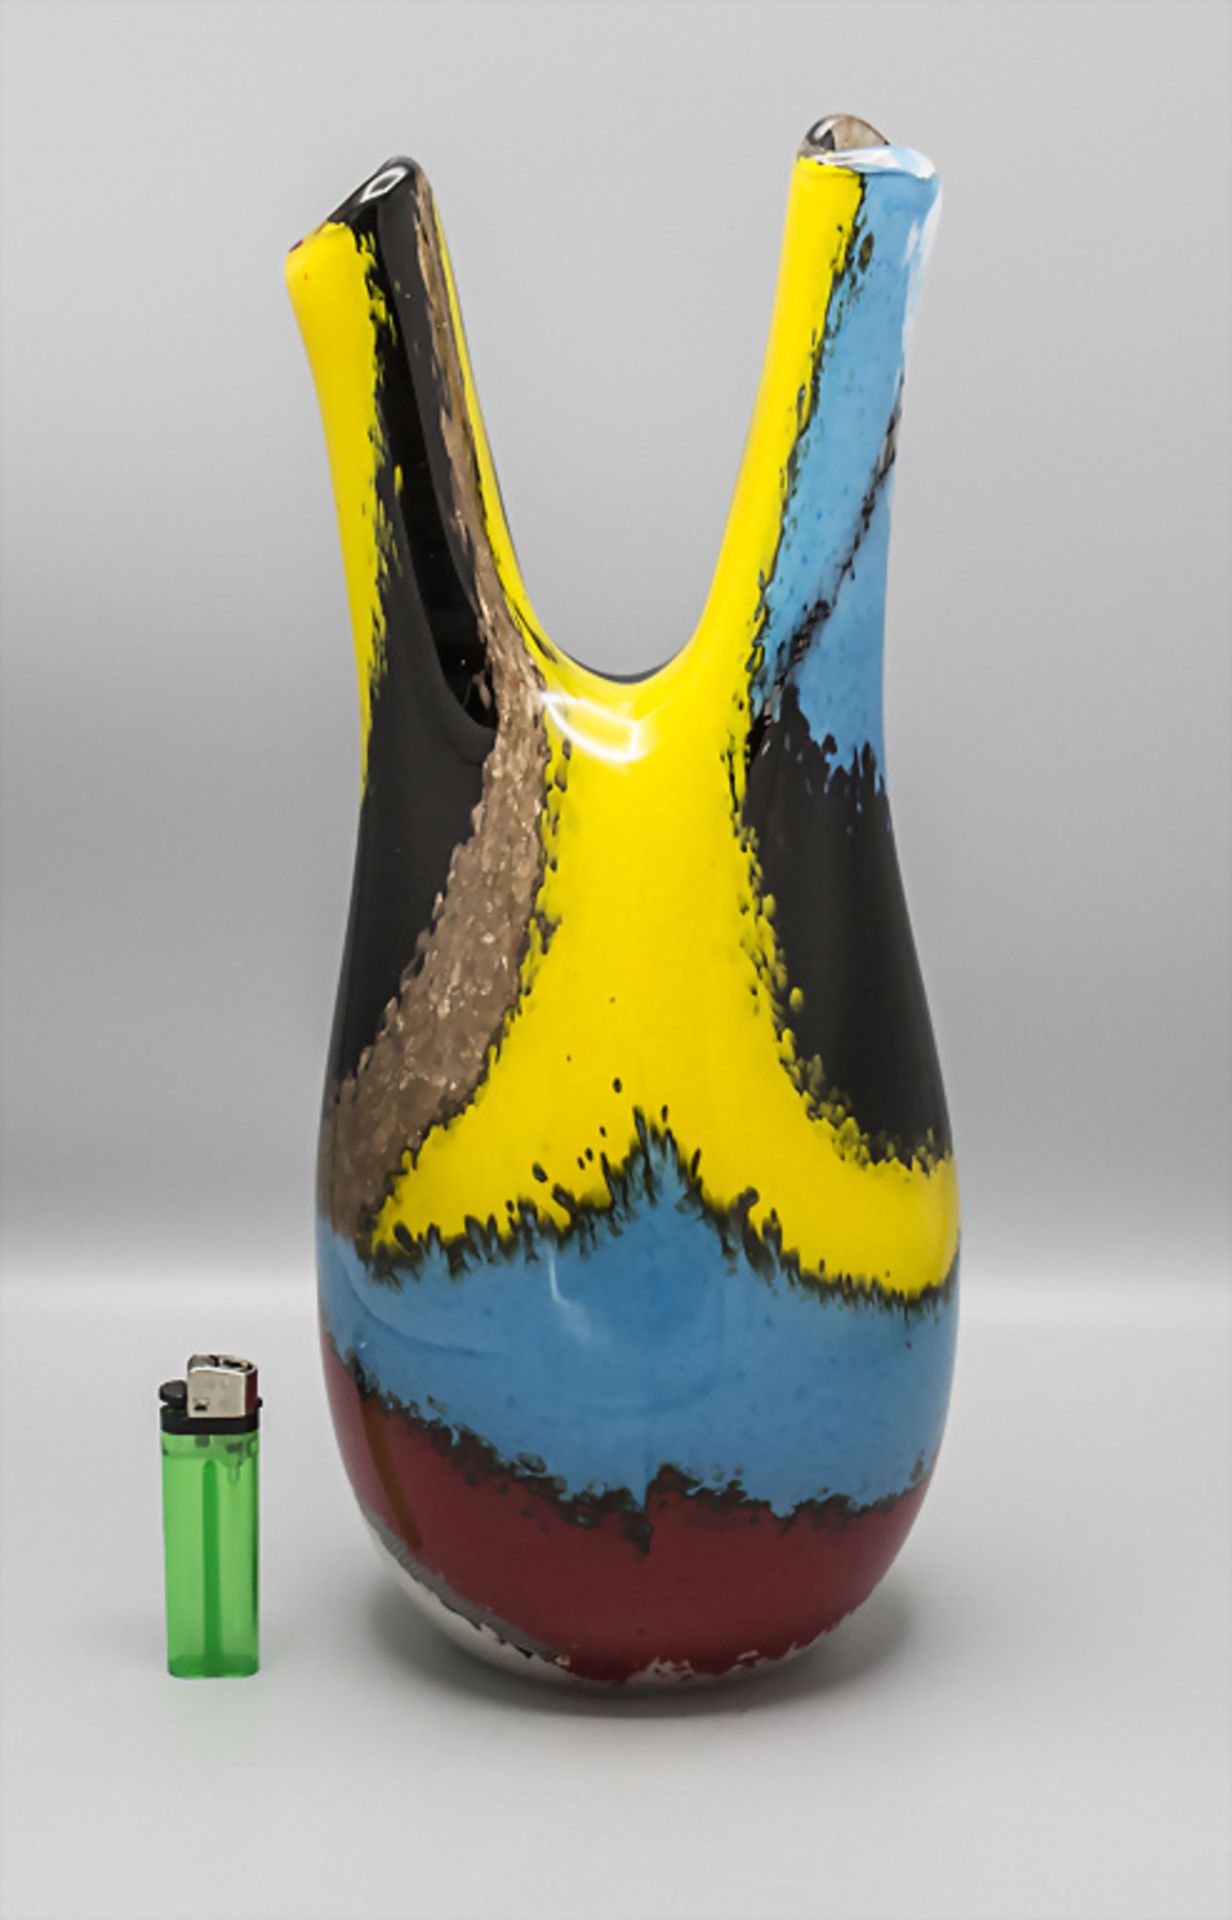 Doppelhalsvase / A double neck vase, Serie 'Oriente Salomone', Dino Martens, Murano, 1950 - Image 2 of 5